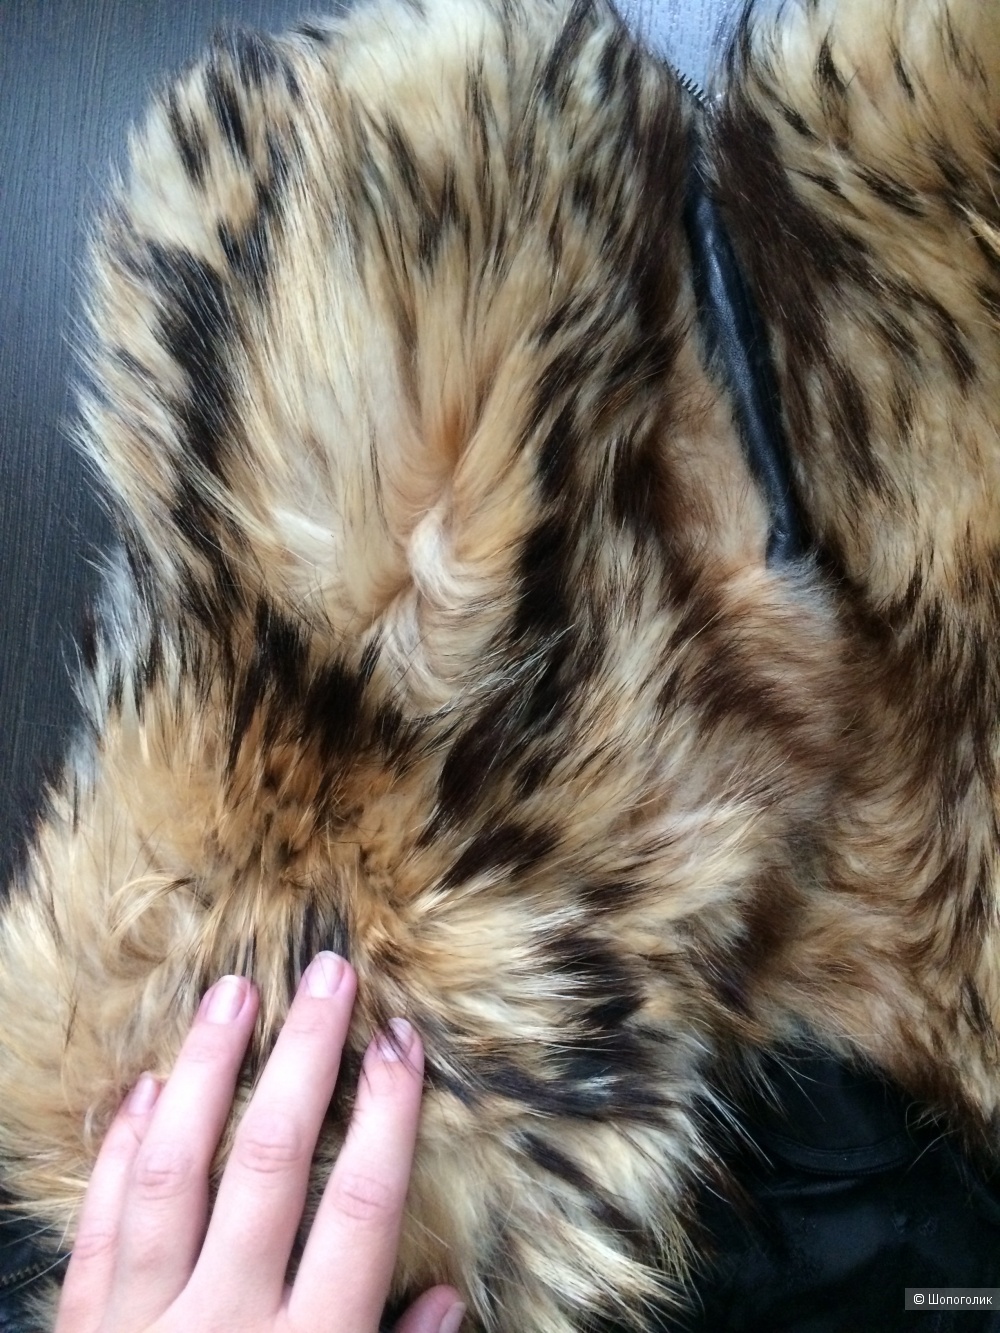 Курточка кожаная Fani 42-44 размер